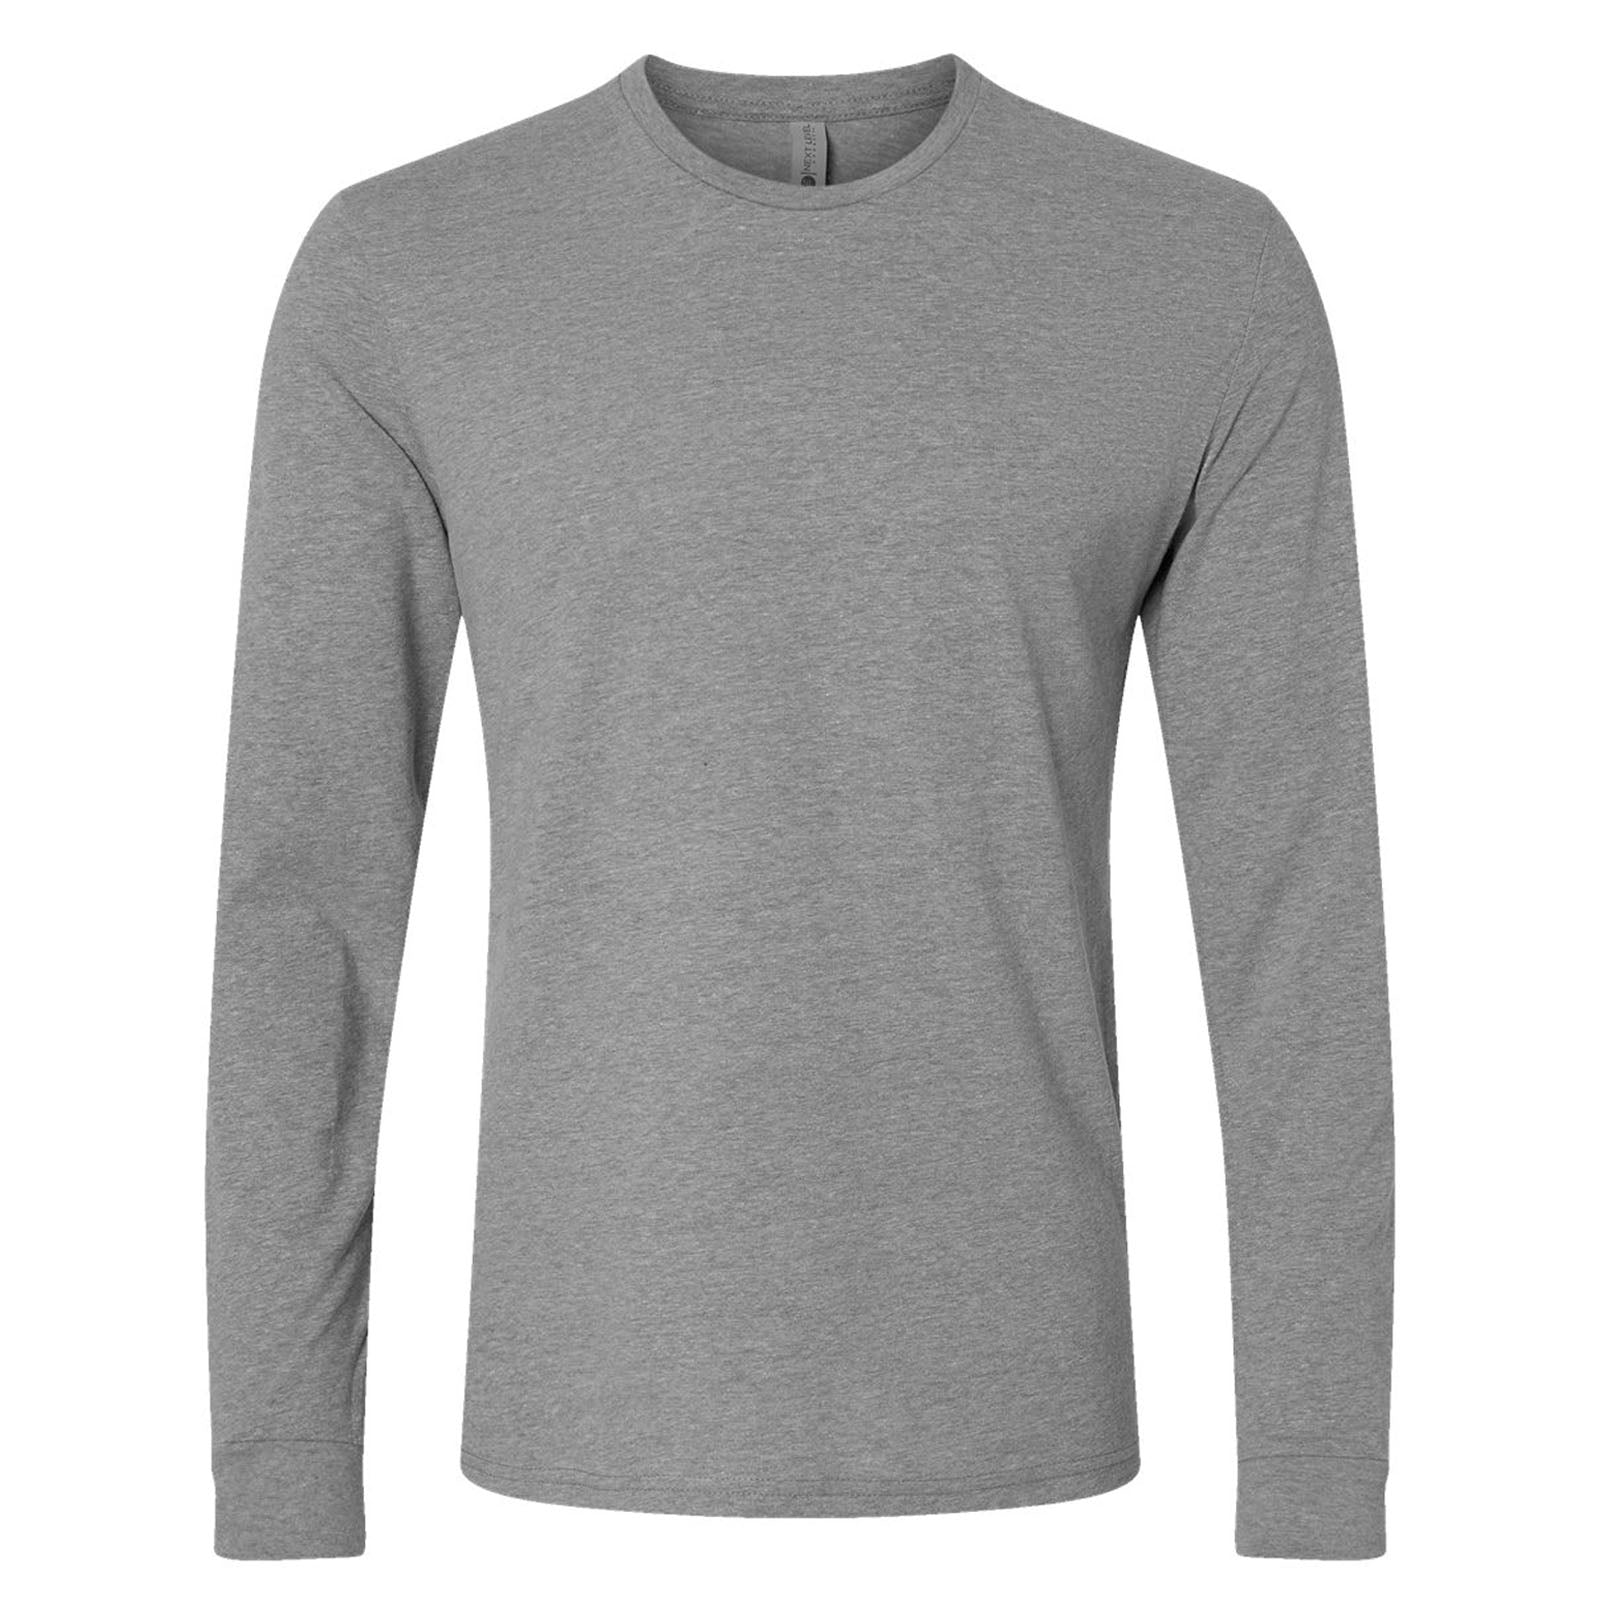 Mato & Hash Unisex Cotton/Polyester Blend Long Sleeve T Shirt - Mato & Hash